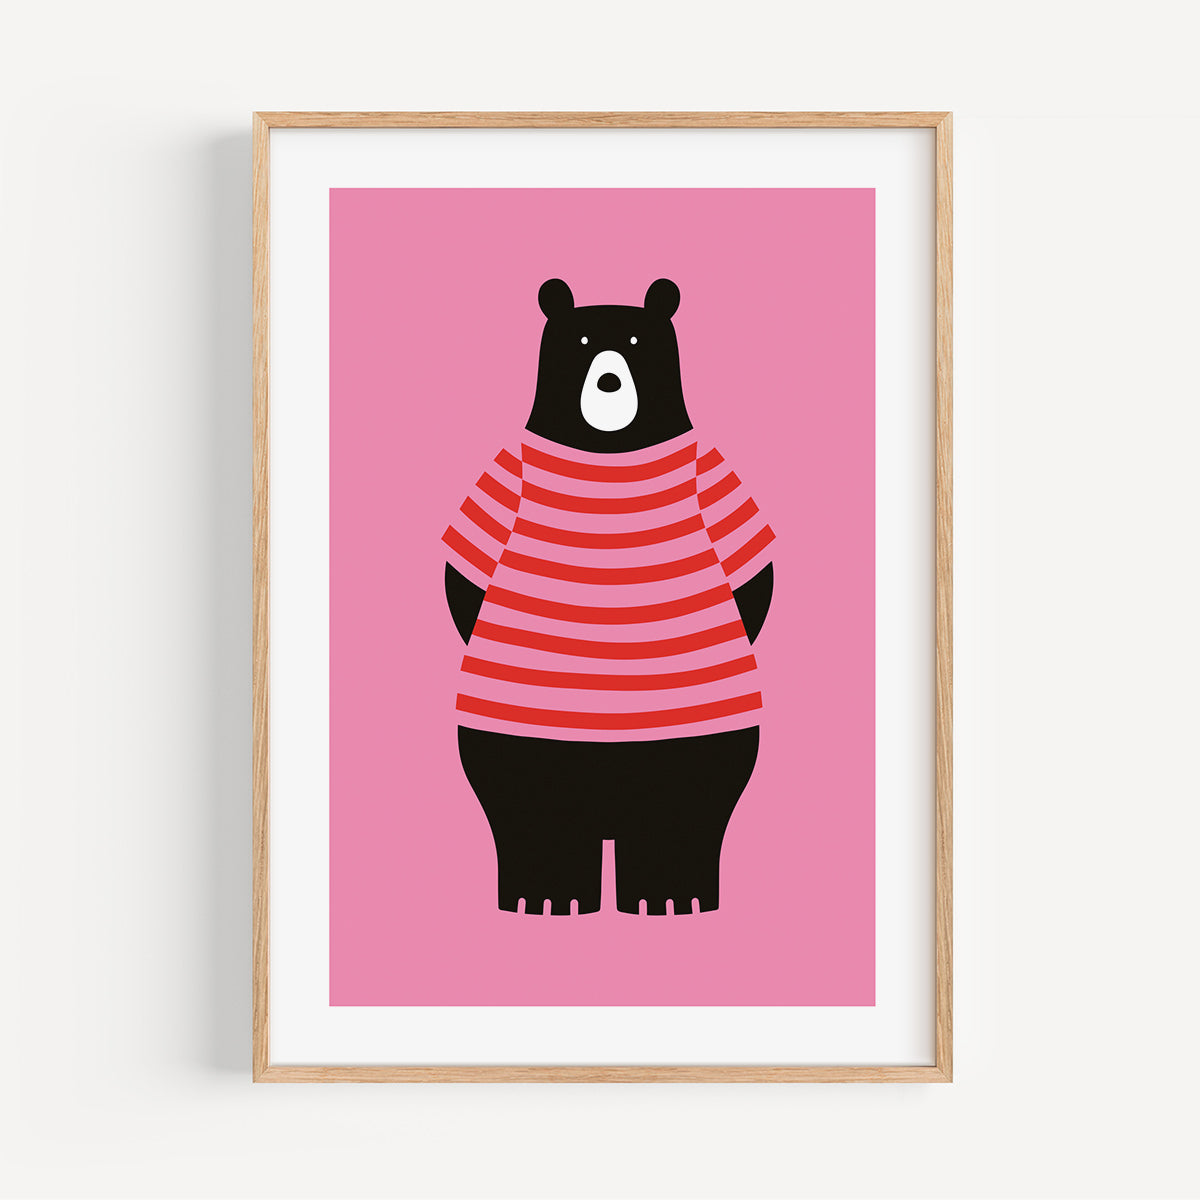 PINK BEAR - Colourful A4 giclée art print